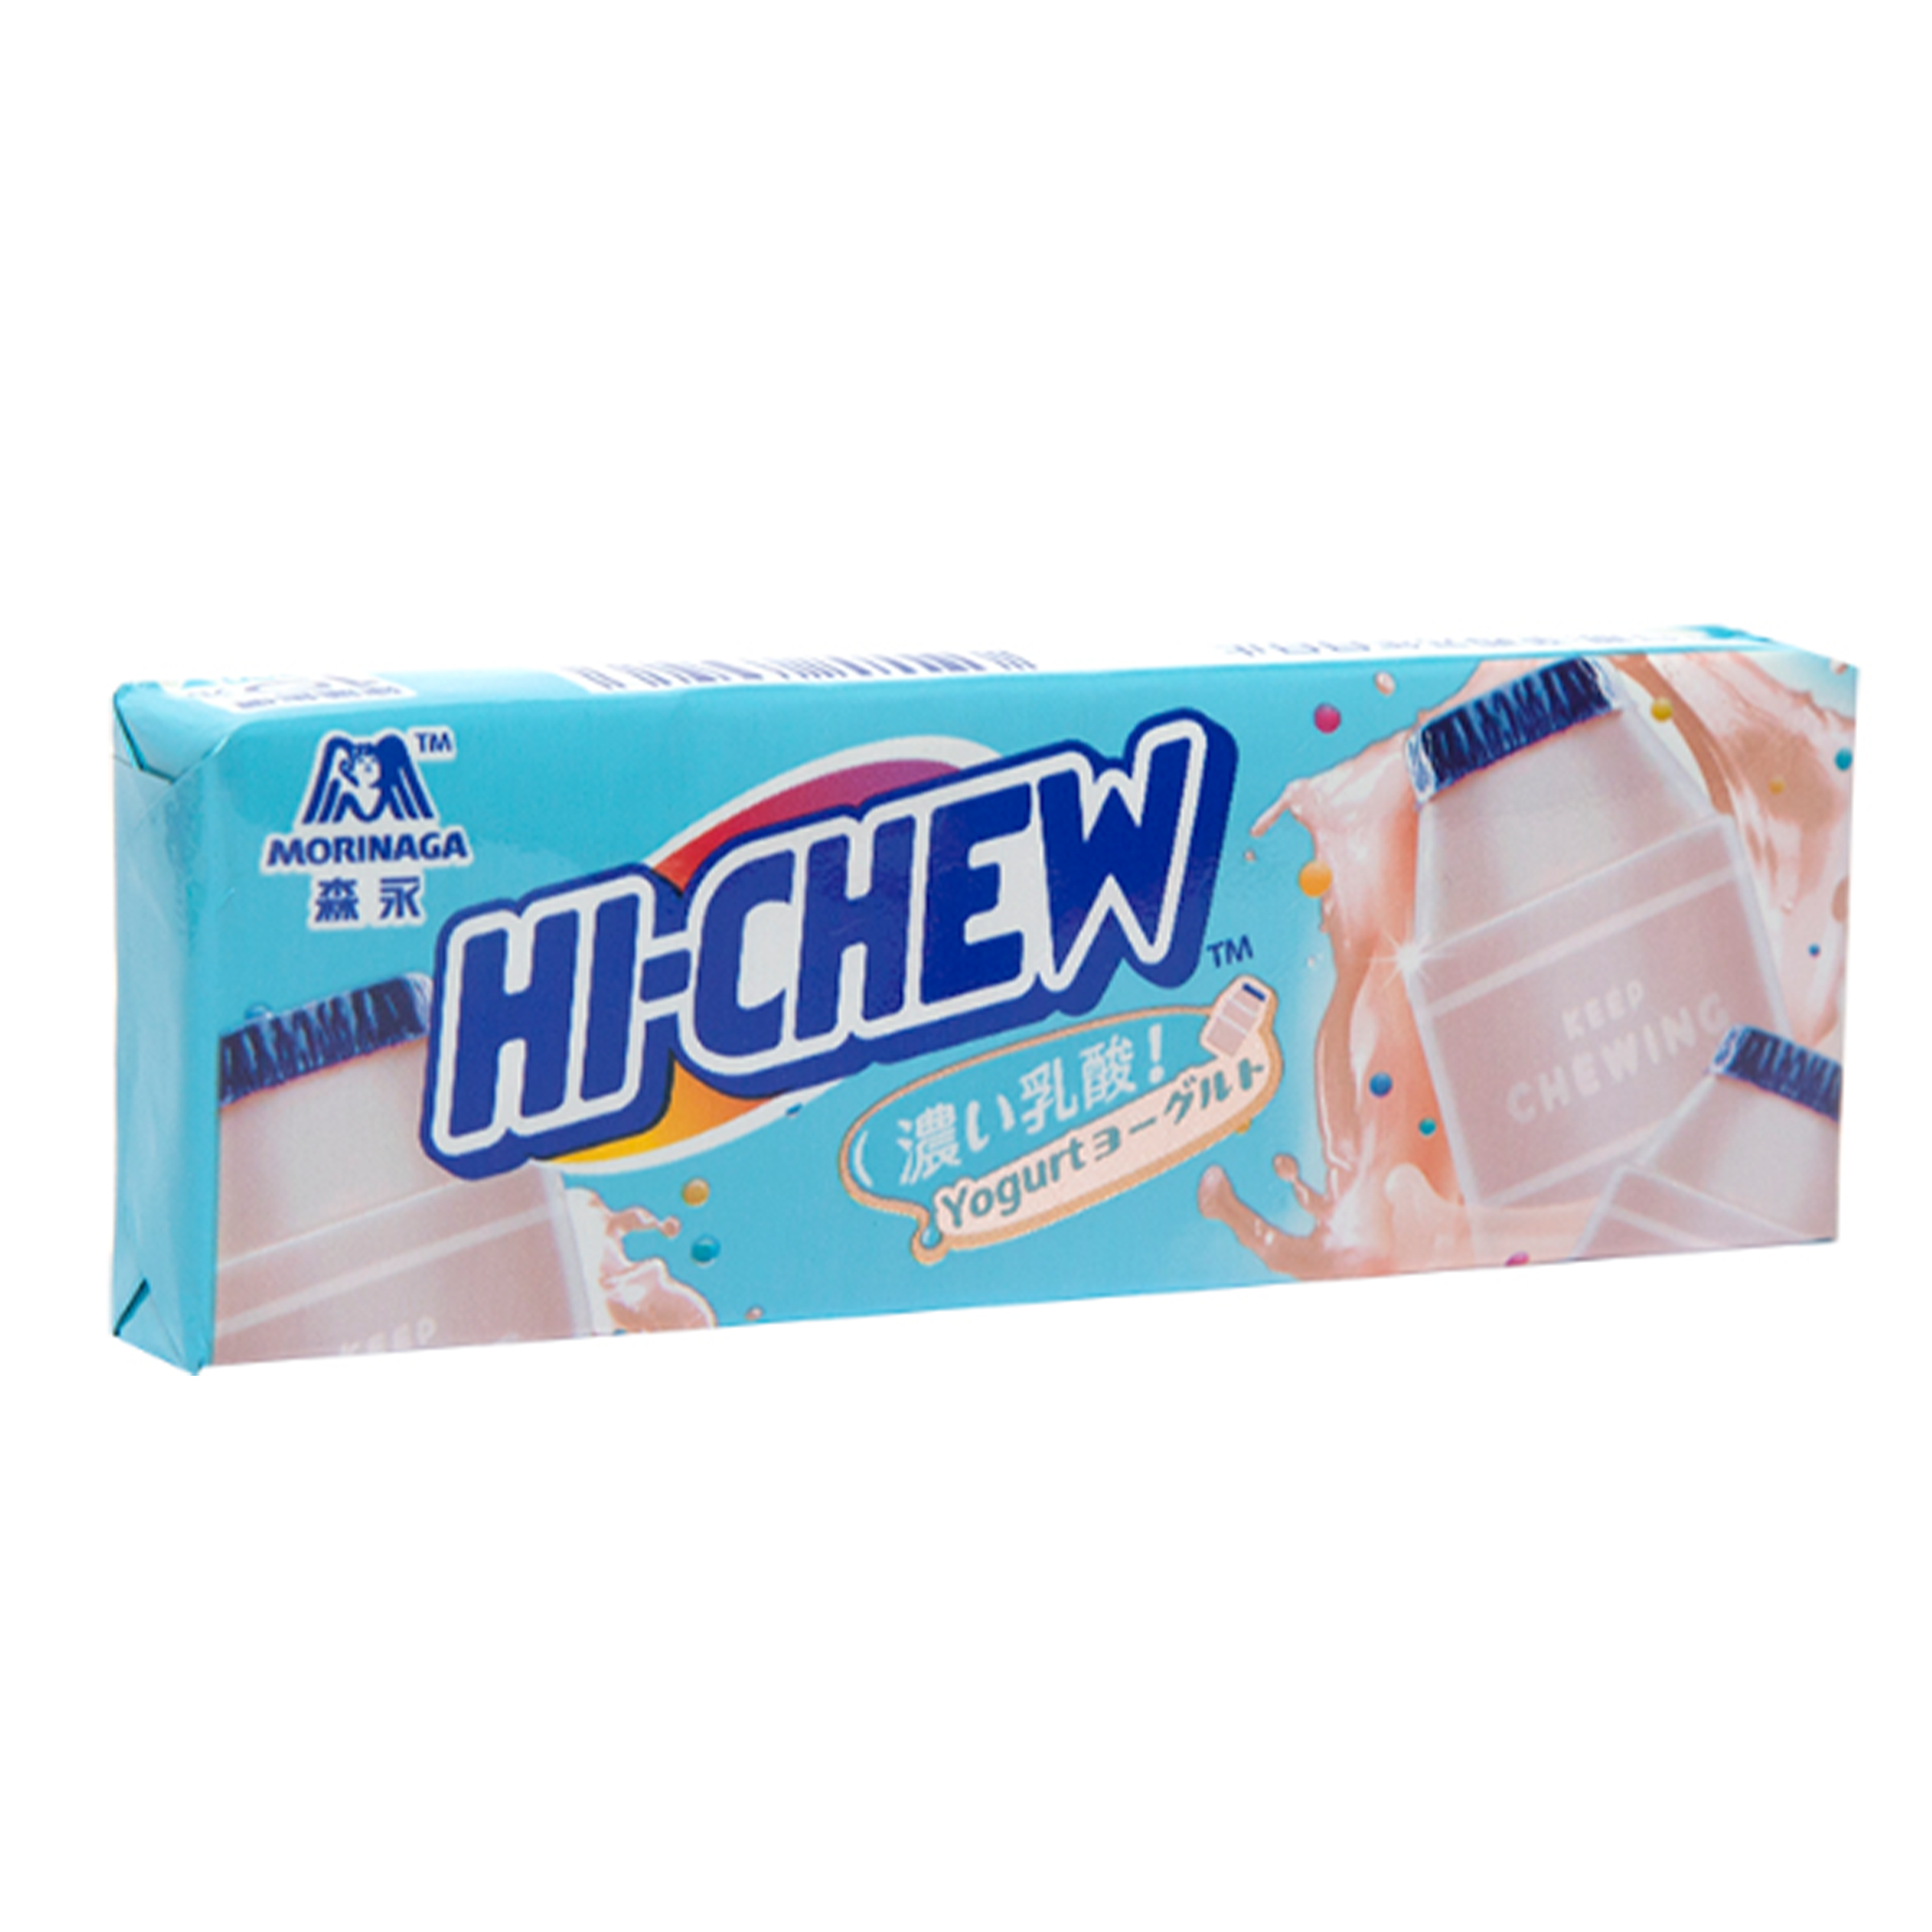 Hi-Chew - Yogurt Flavor (Asia)